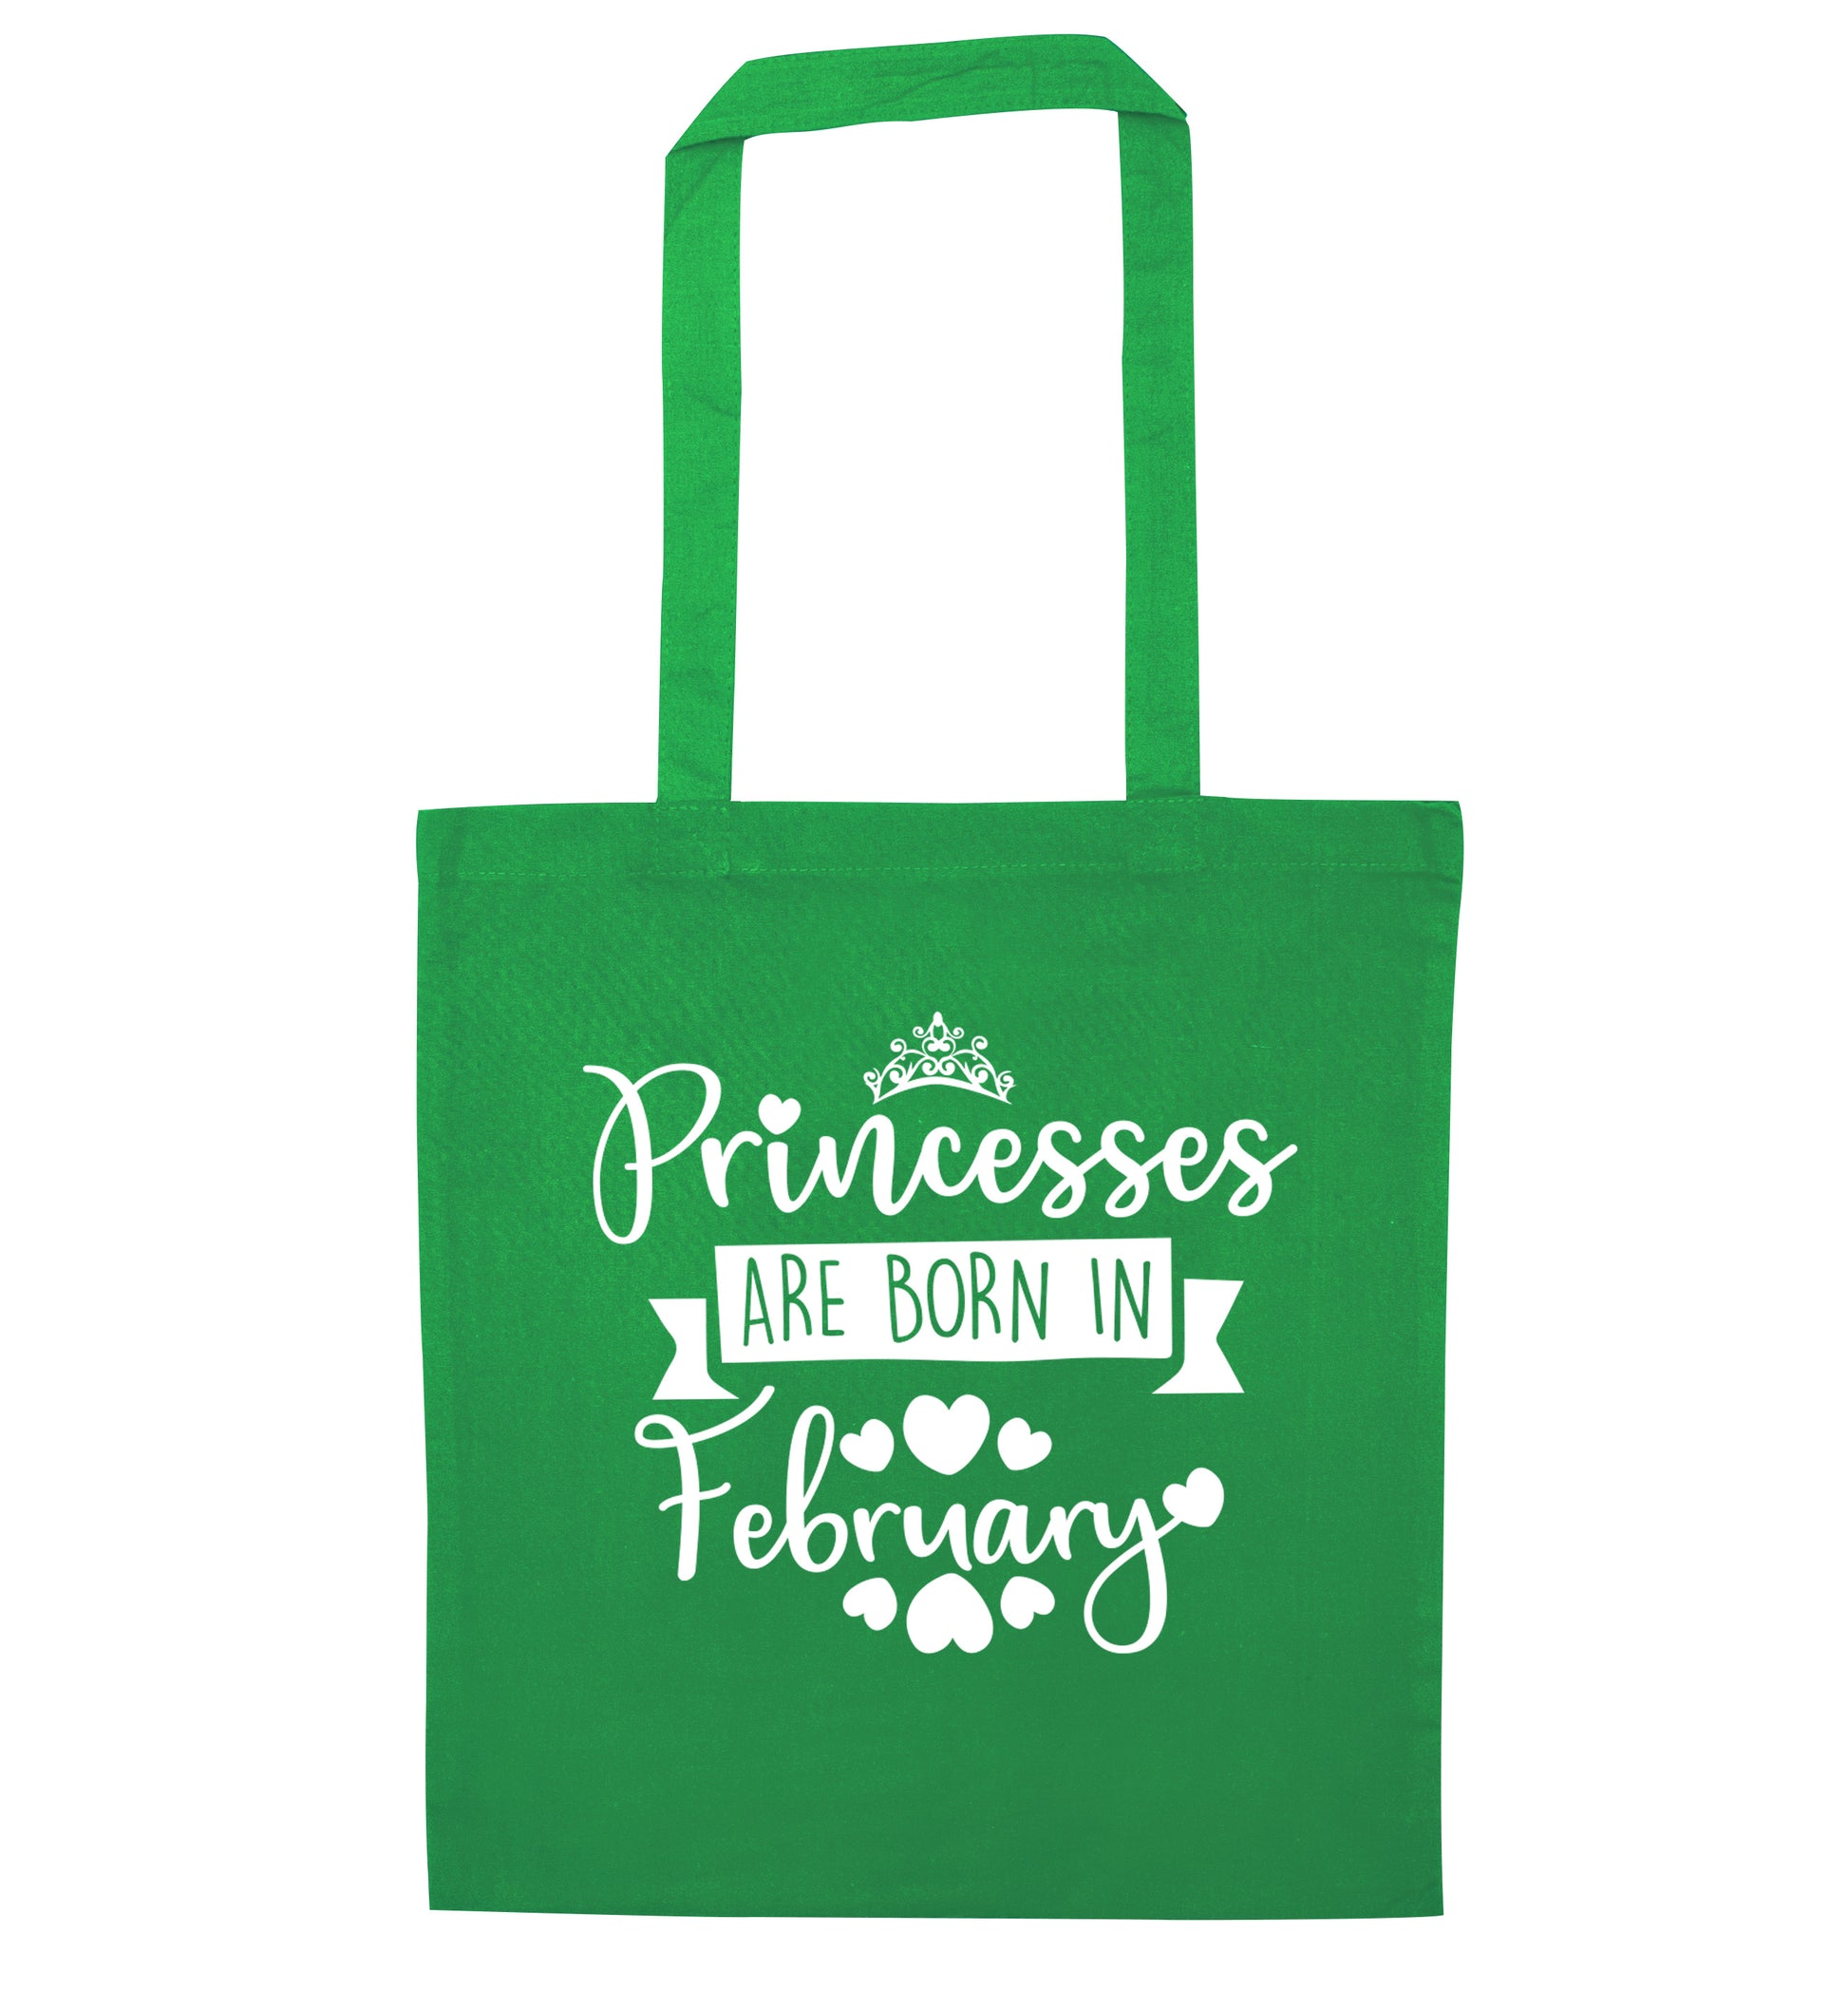 Princesses are born in February green tote bag